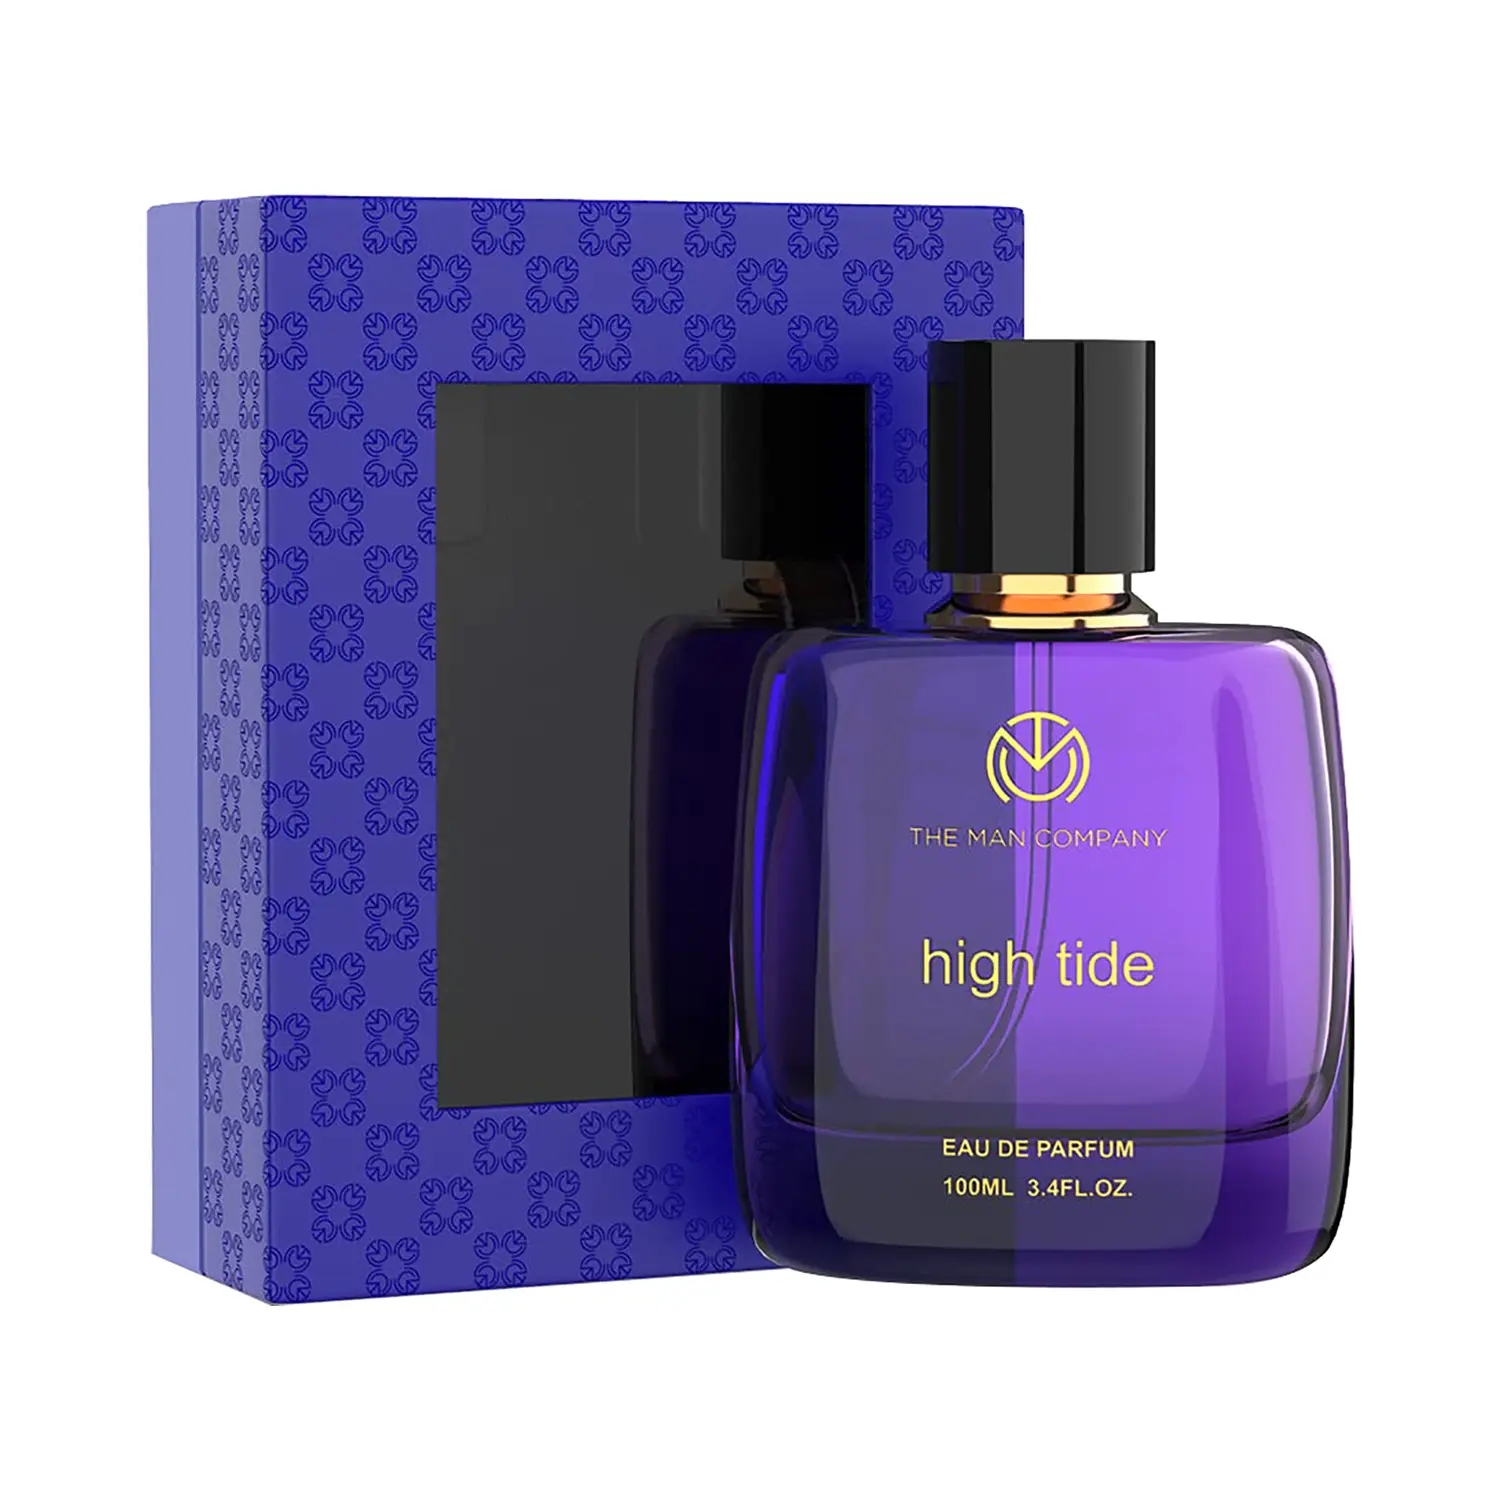 The Man Company | The Man Company High Tide Eau De Parfum (100ml)